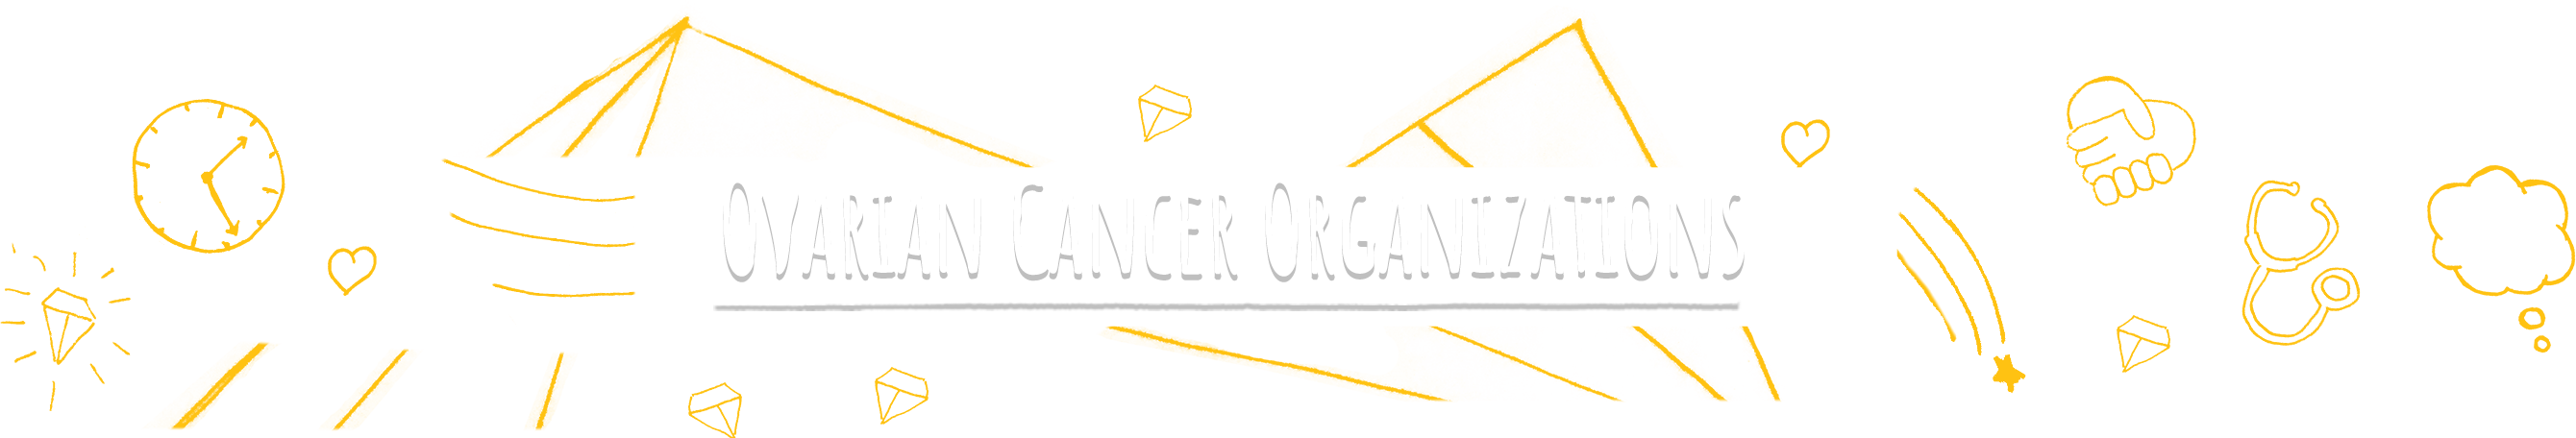 Ovarian Cancer Organizations